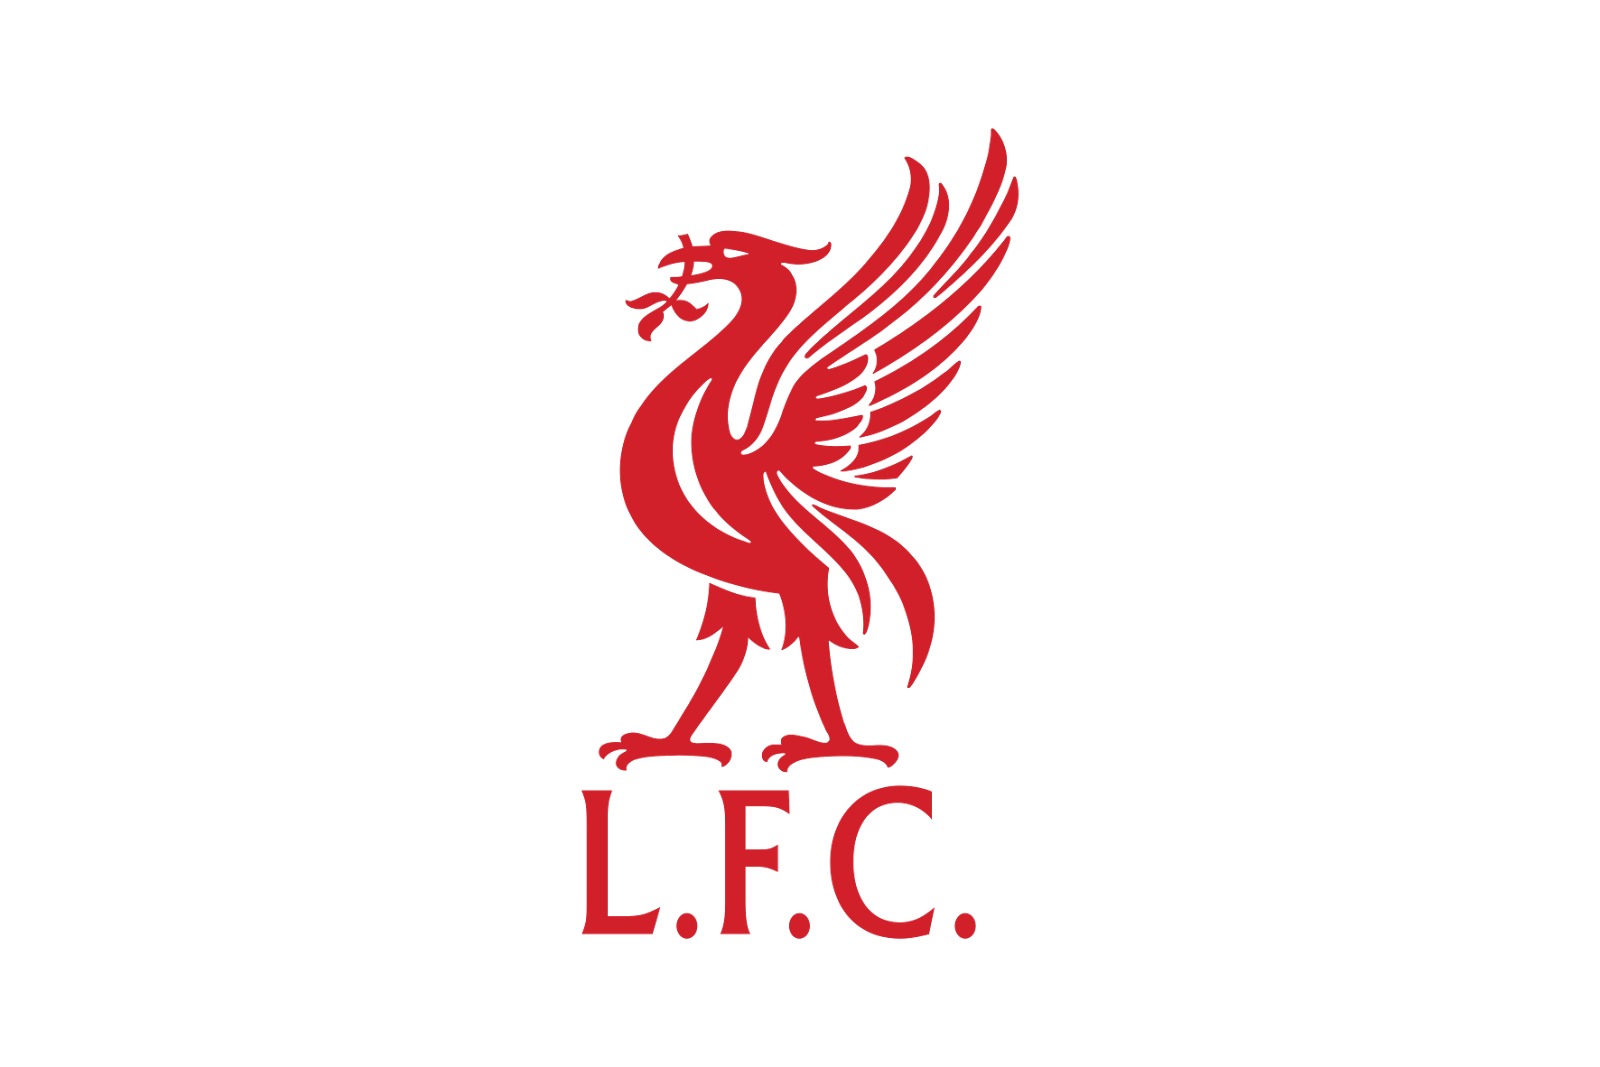 Liverpool FC Brand Value & Company Profile | Brandirectory